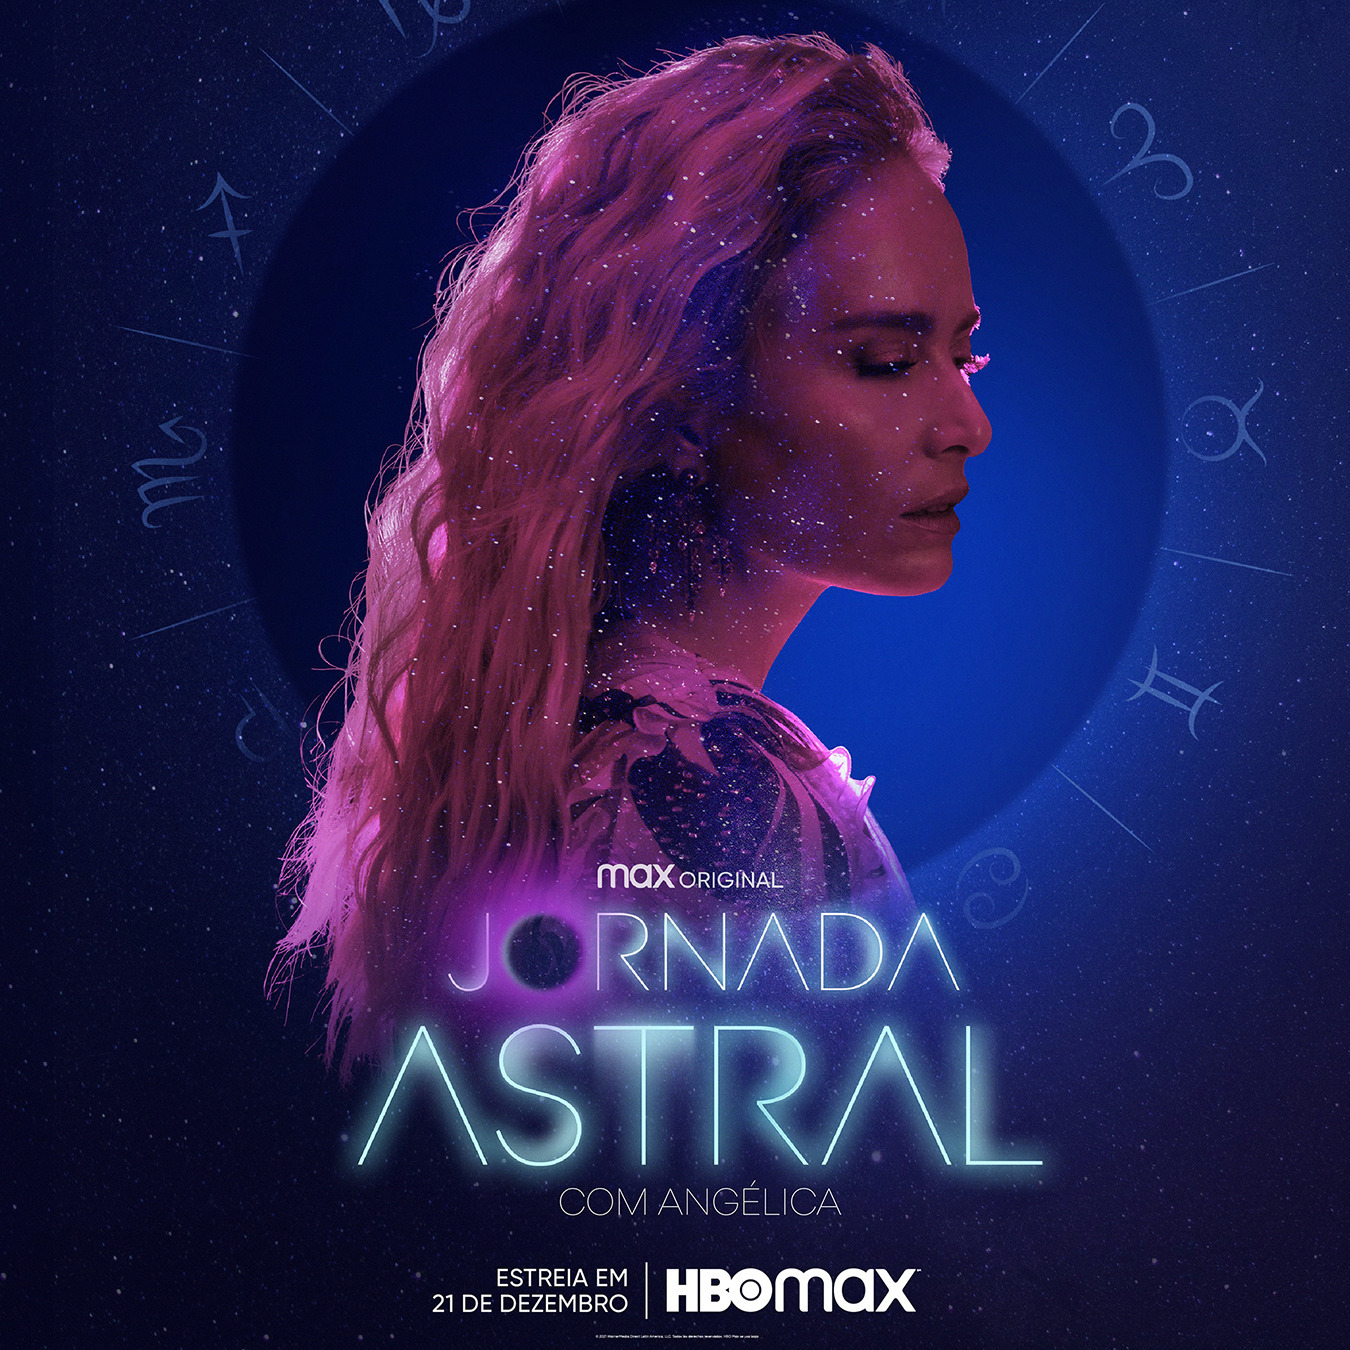 Extra Large TV Poster Image for Jornada Astral 